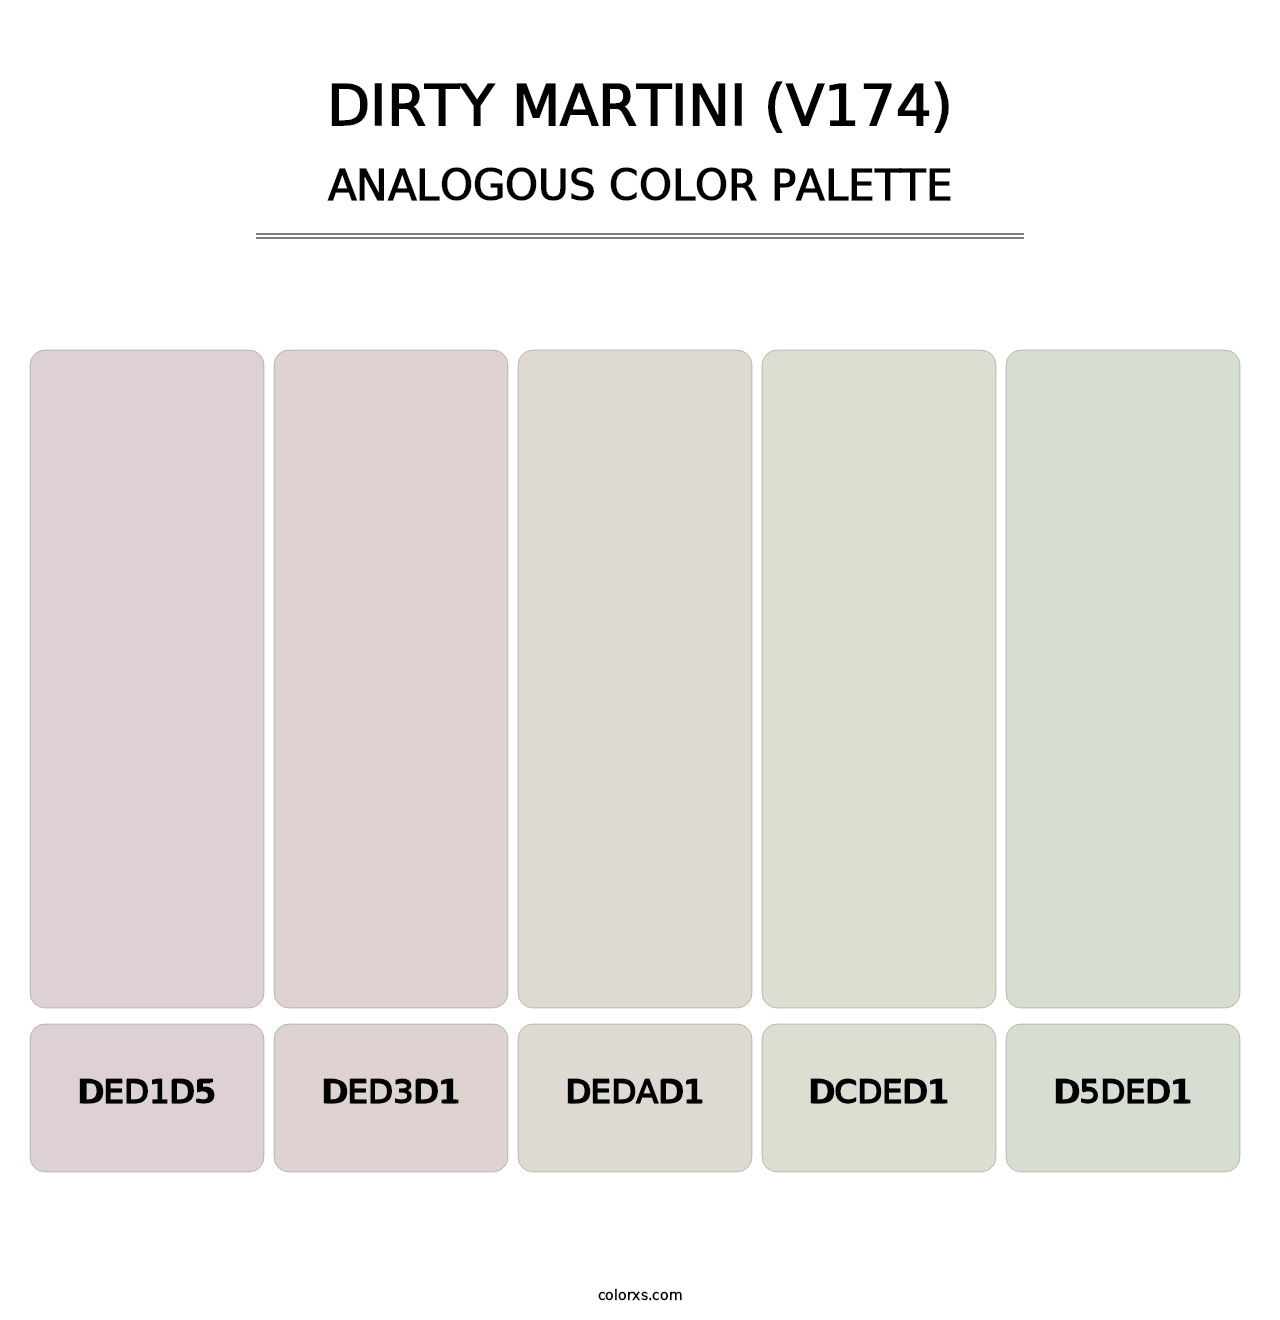 Dirty Martini (V174) - Analogous Color Palette